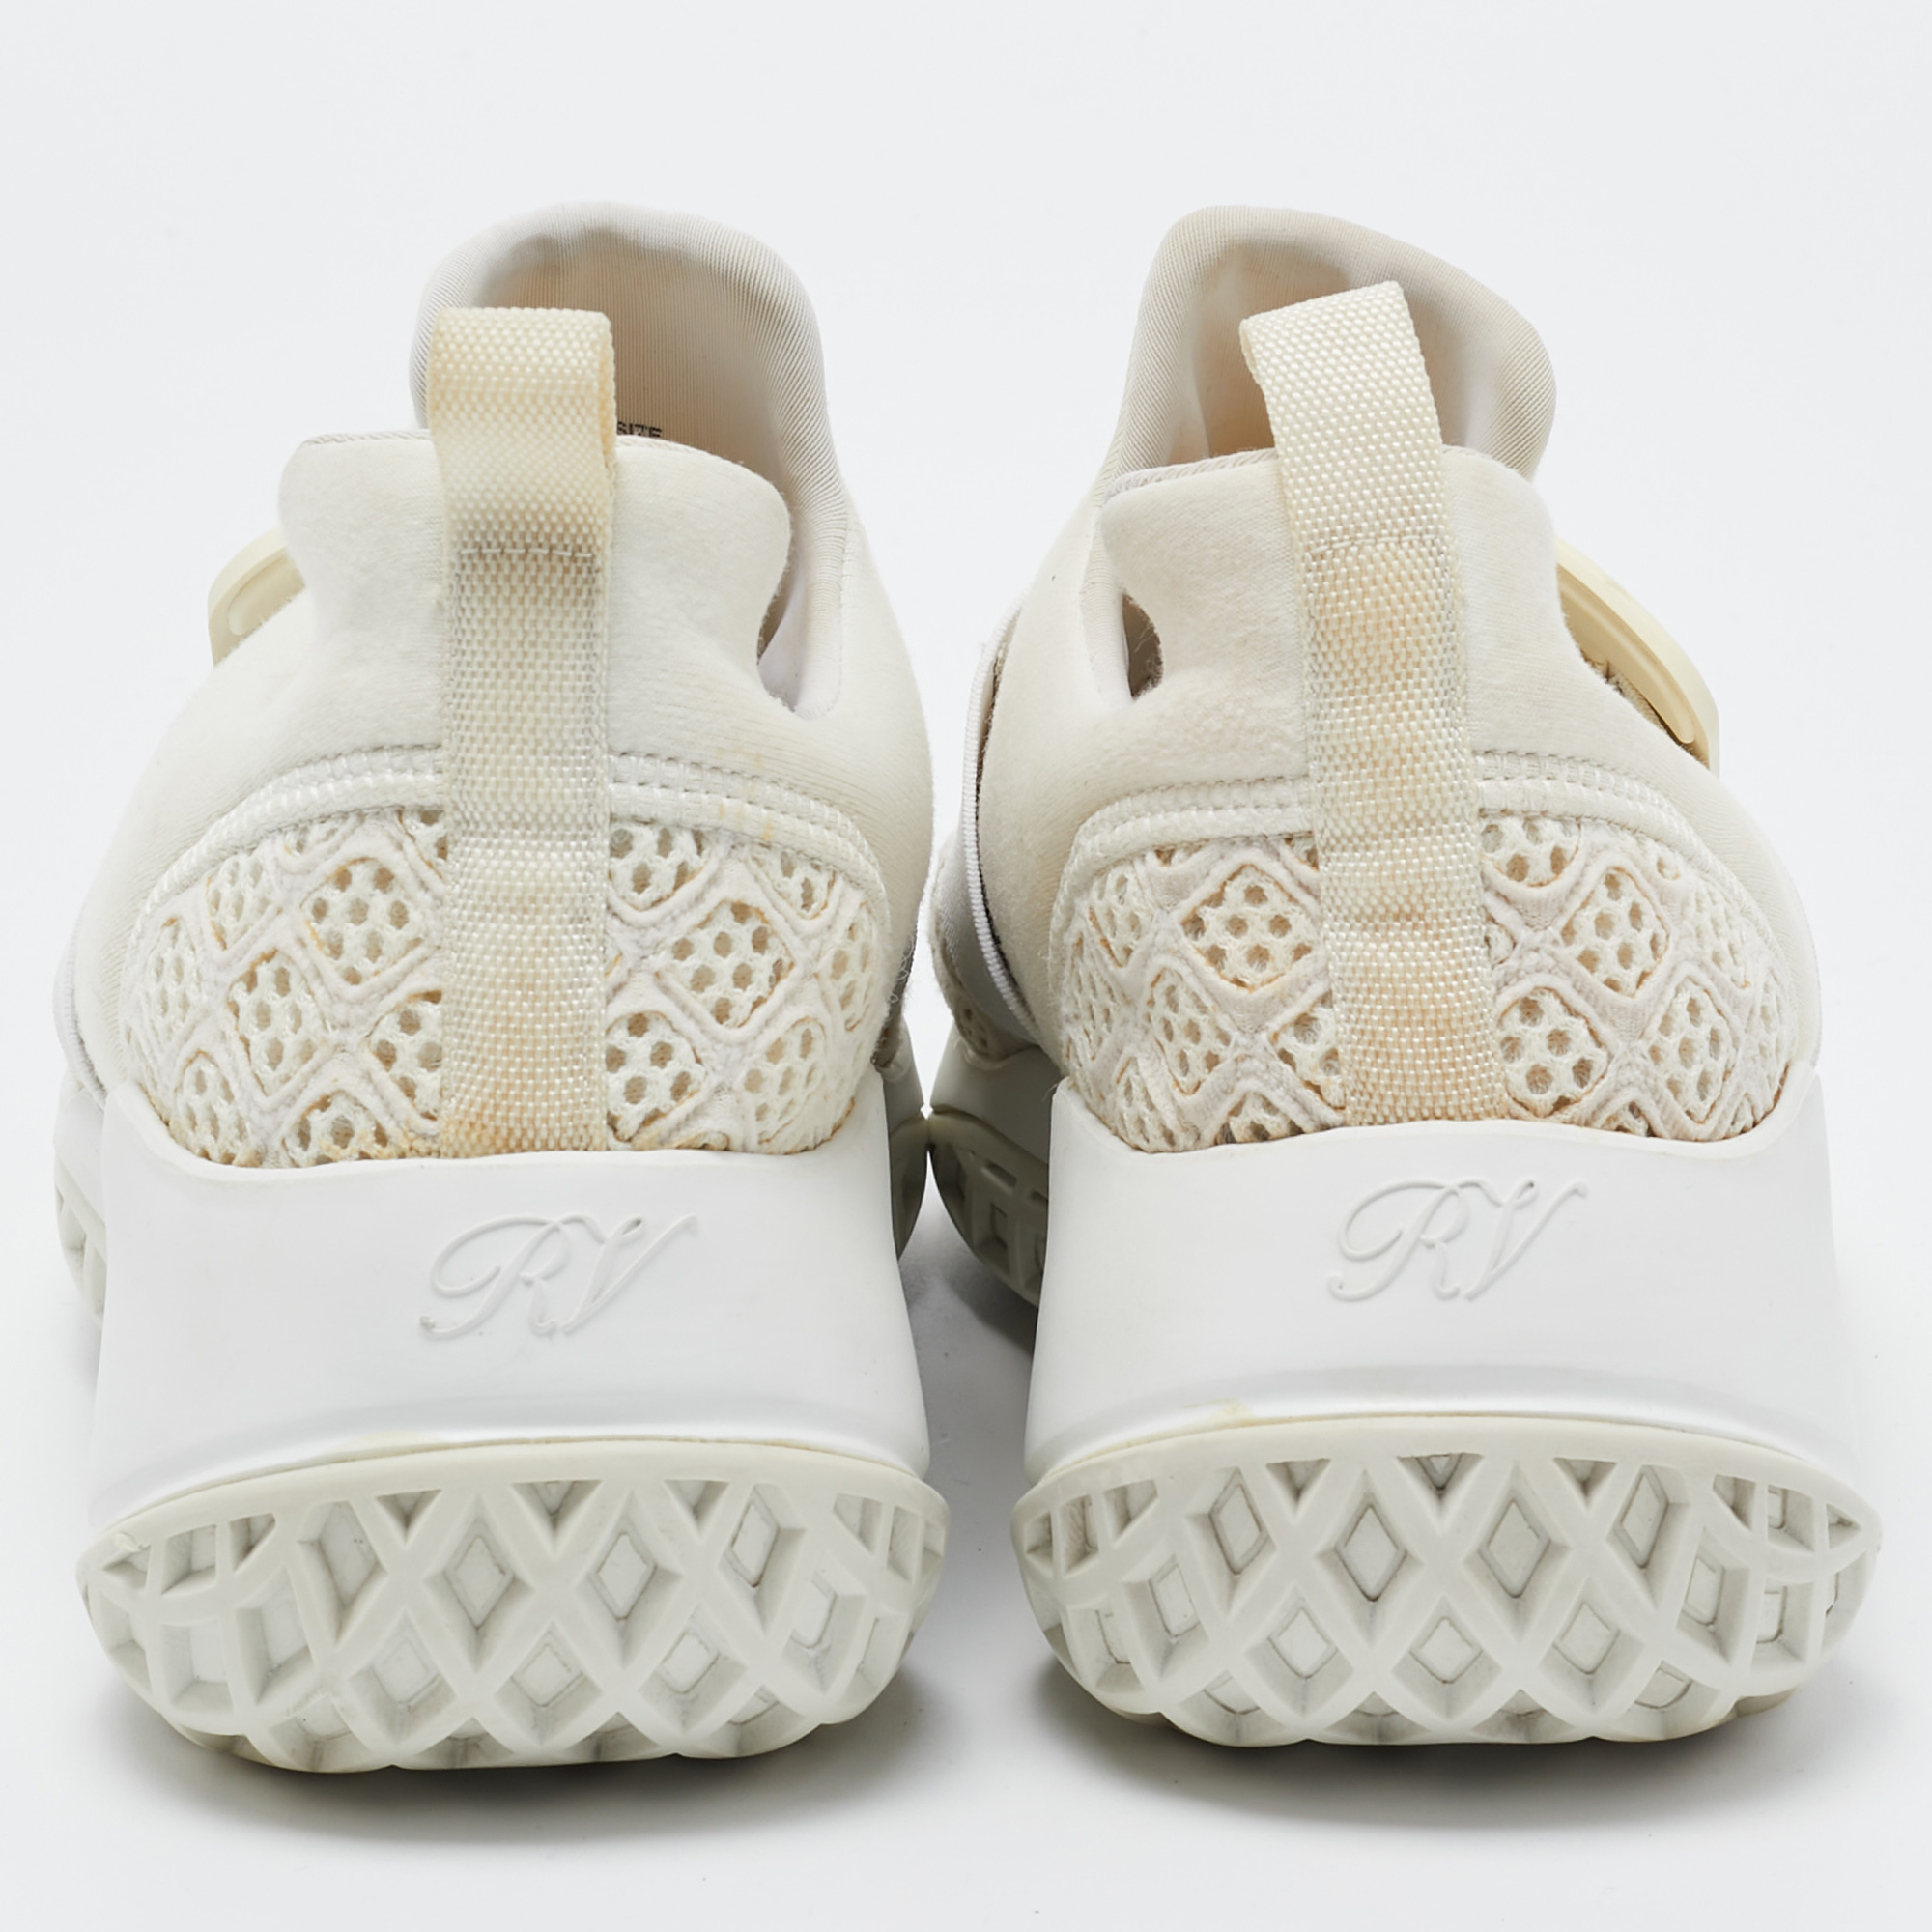 Roger Vivier White Neoprene And Lace Viv Run Sneakers Size 35.5